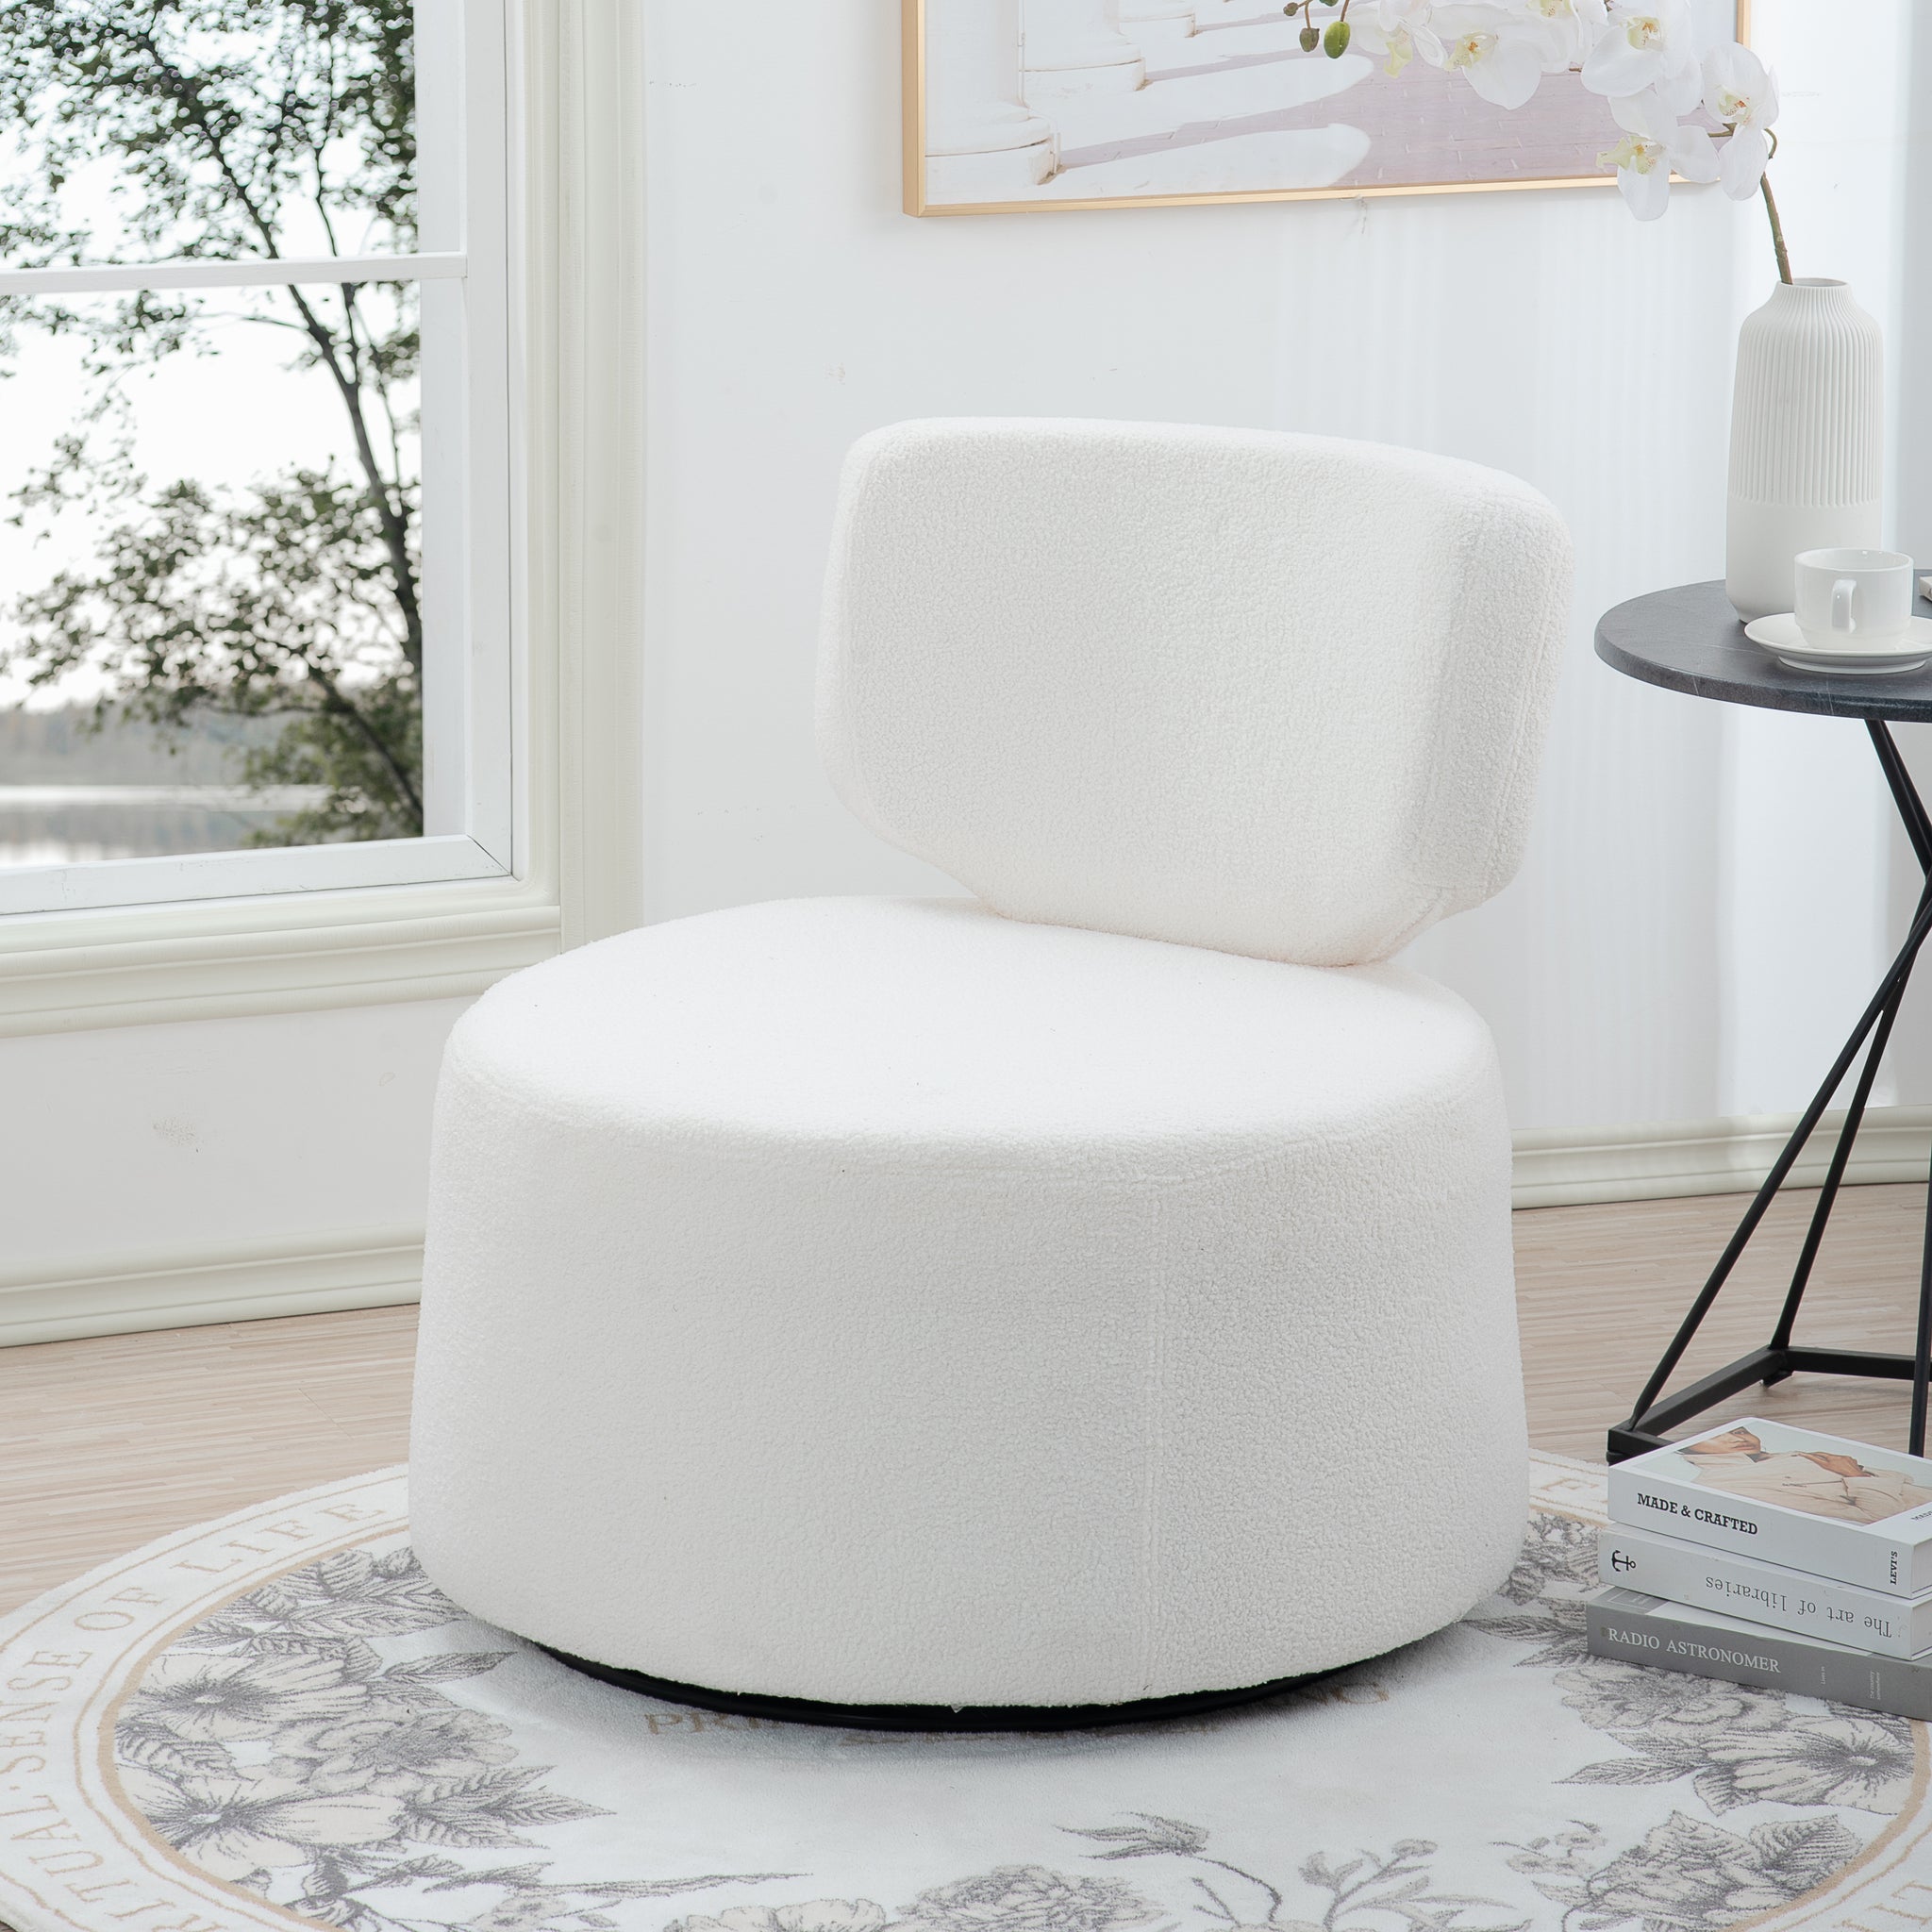 29.13" Wide Swivel Chair white-plush-plush